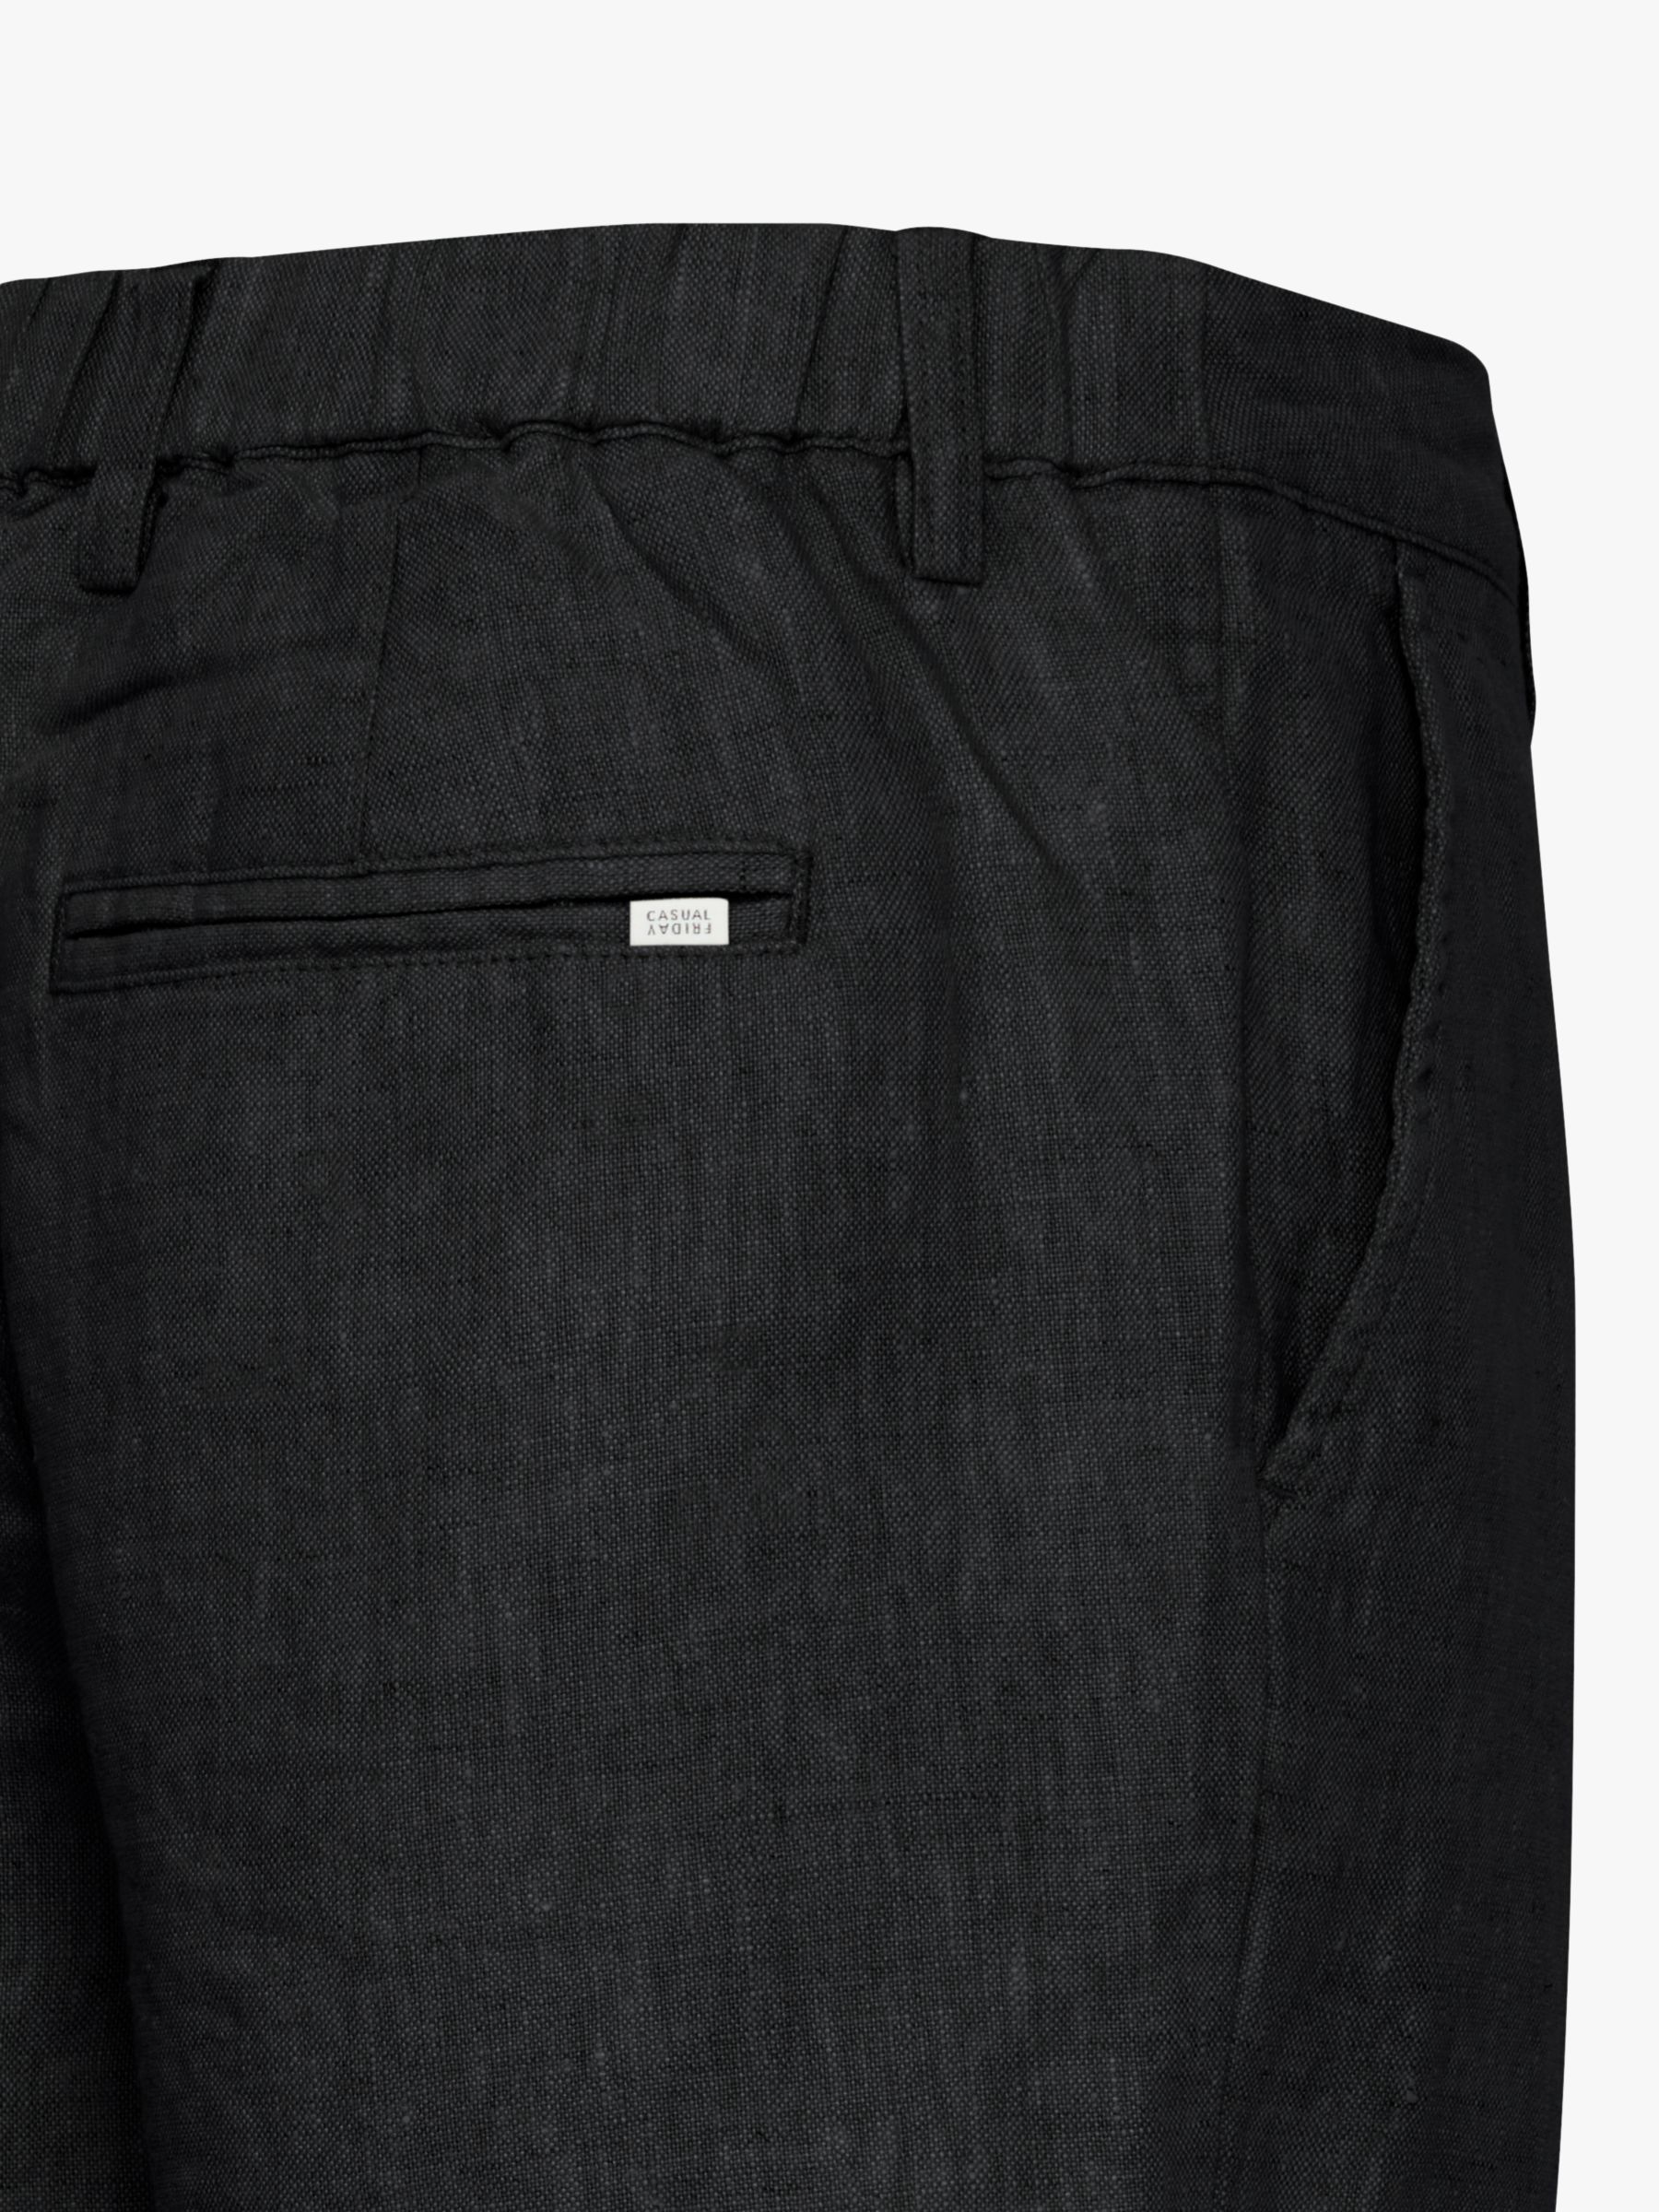 Casual Friday Pandrup Linen Shorts, Black, S